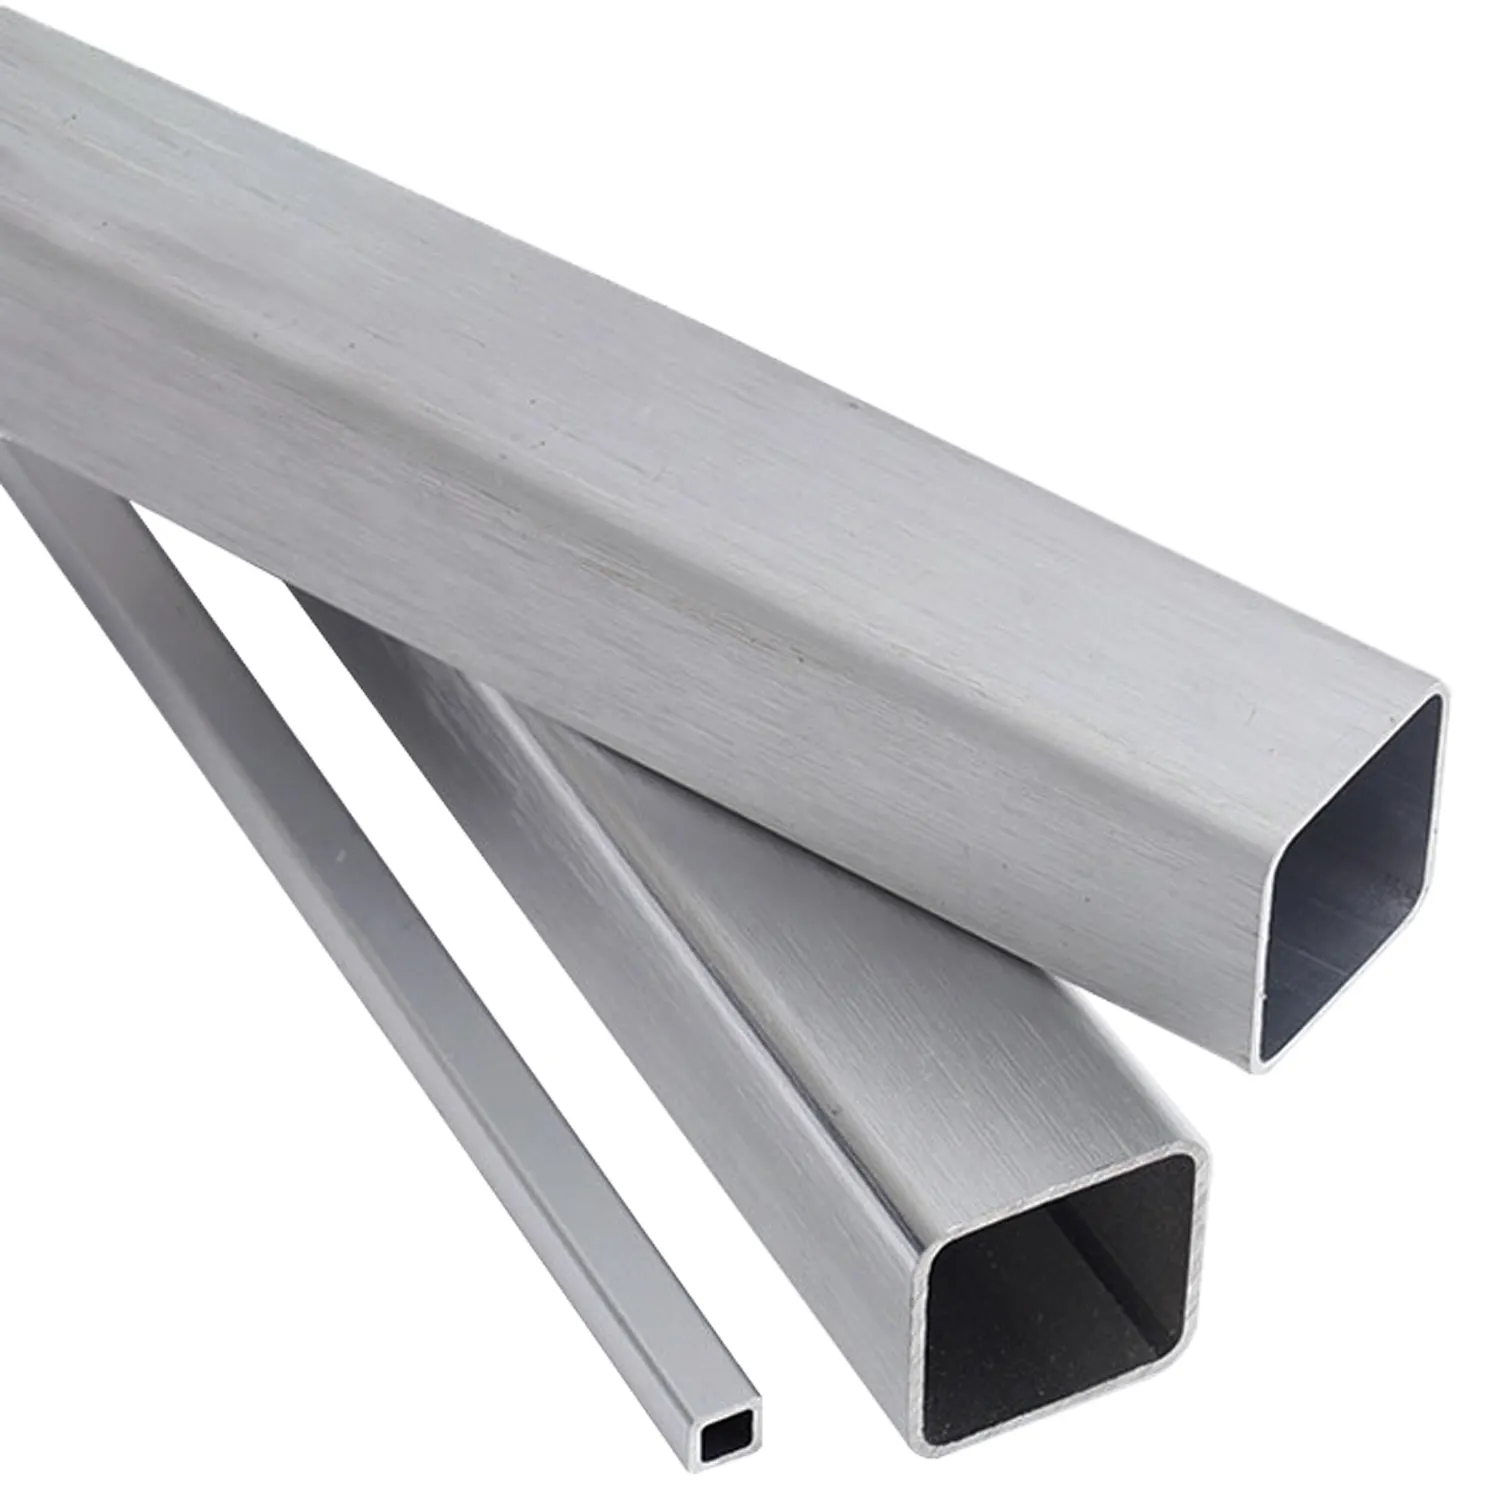 Kualitas tinggi lengkap dalam spesifikasi tahan korosi quare Aluminium profil 6061 Aluminium untuk konstruksi